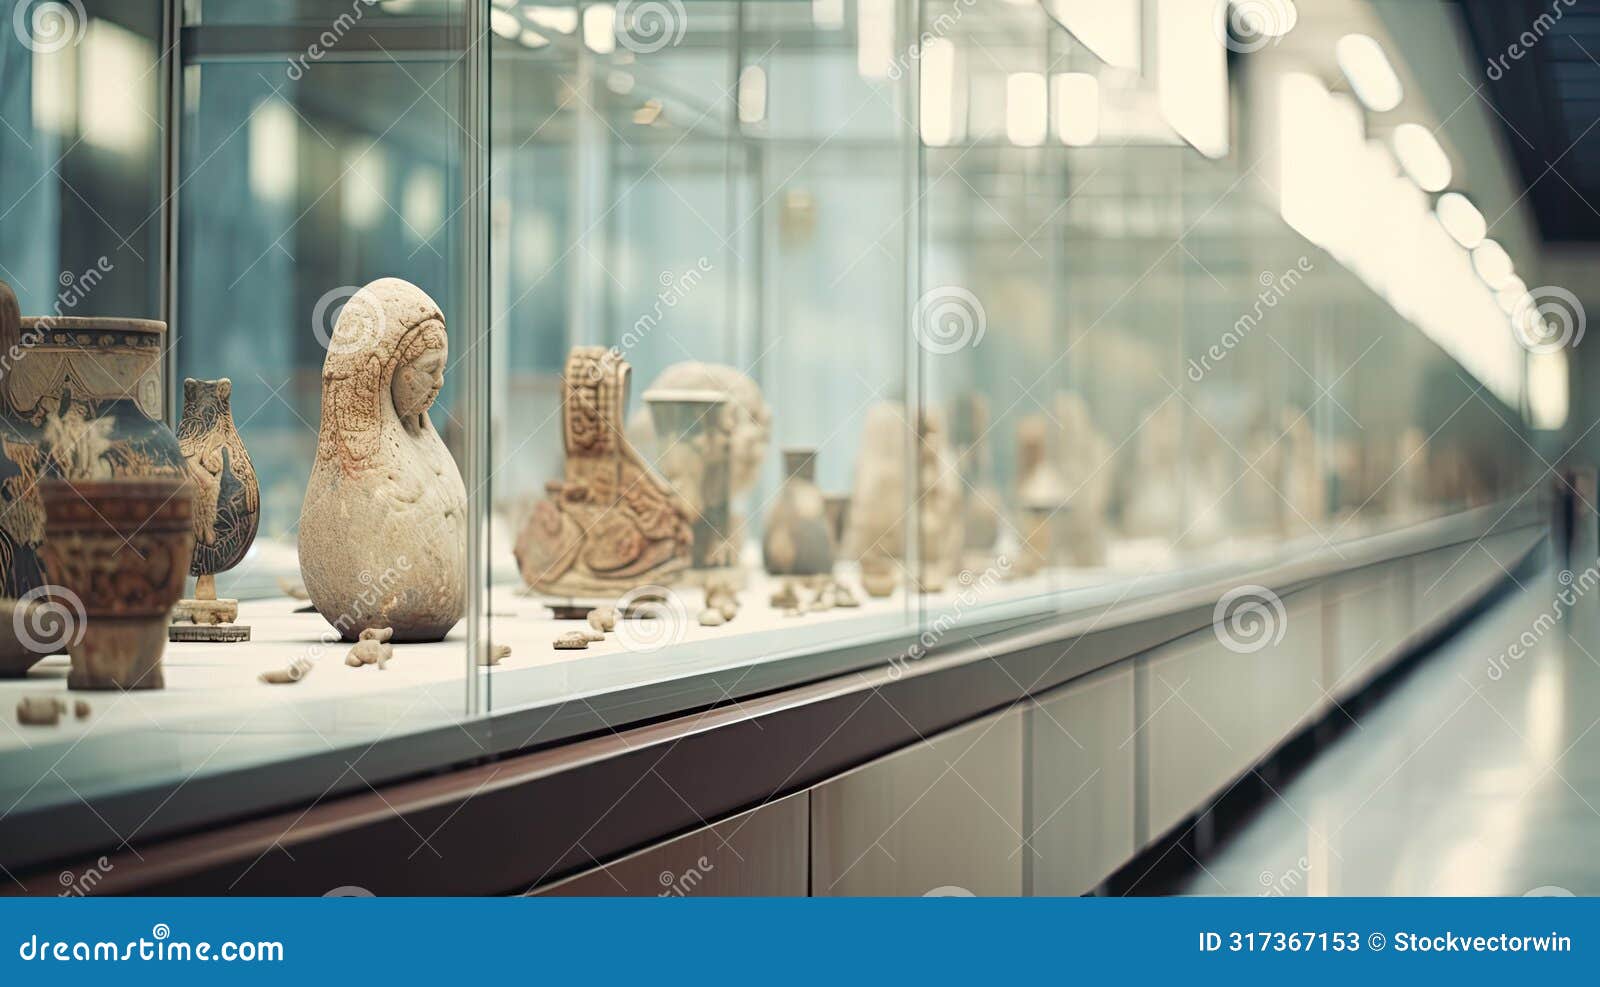 artifacts blurred museum interior